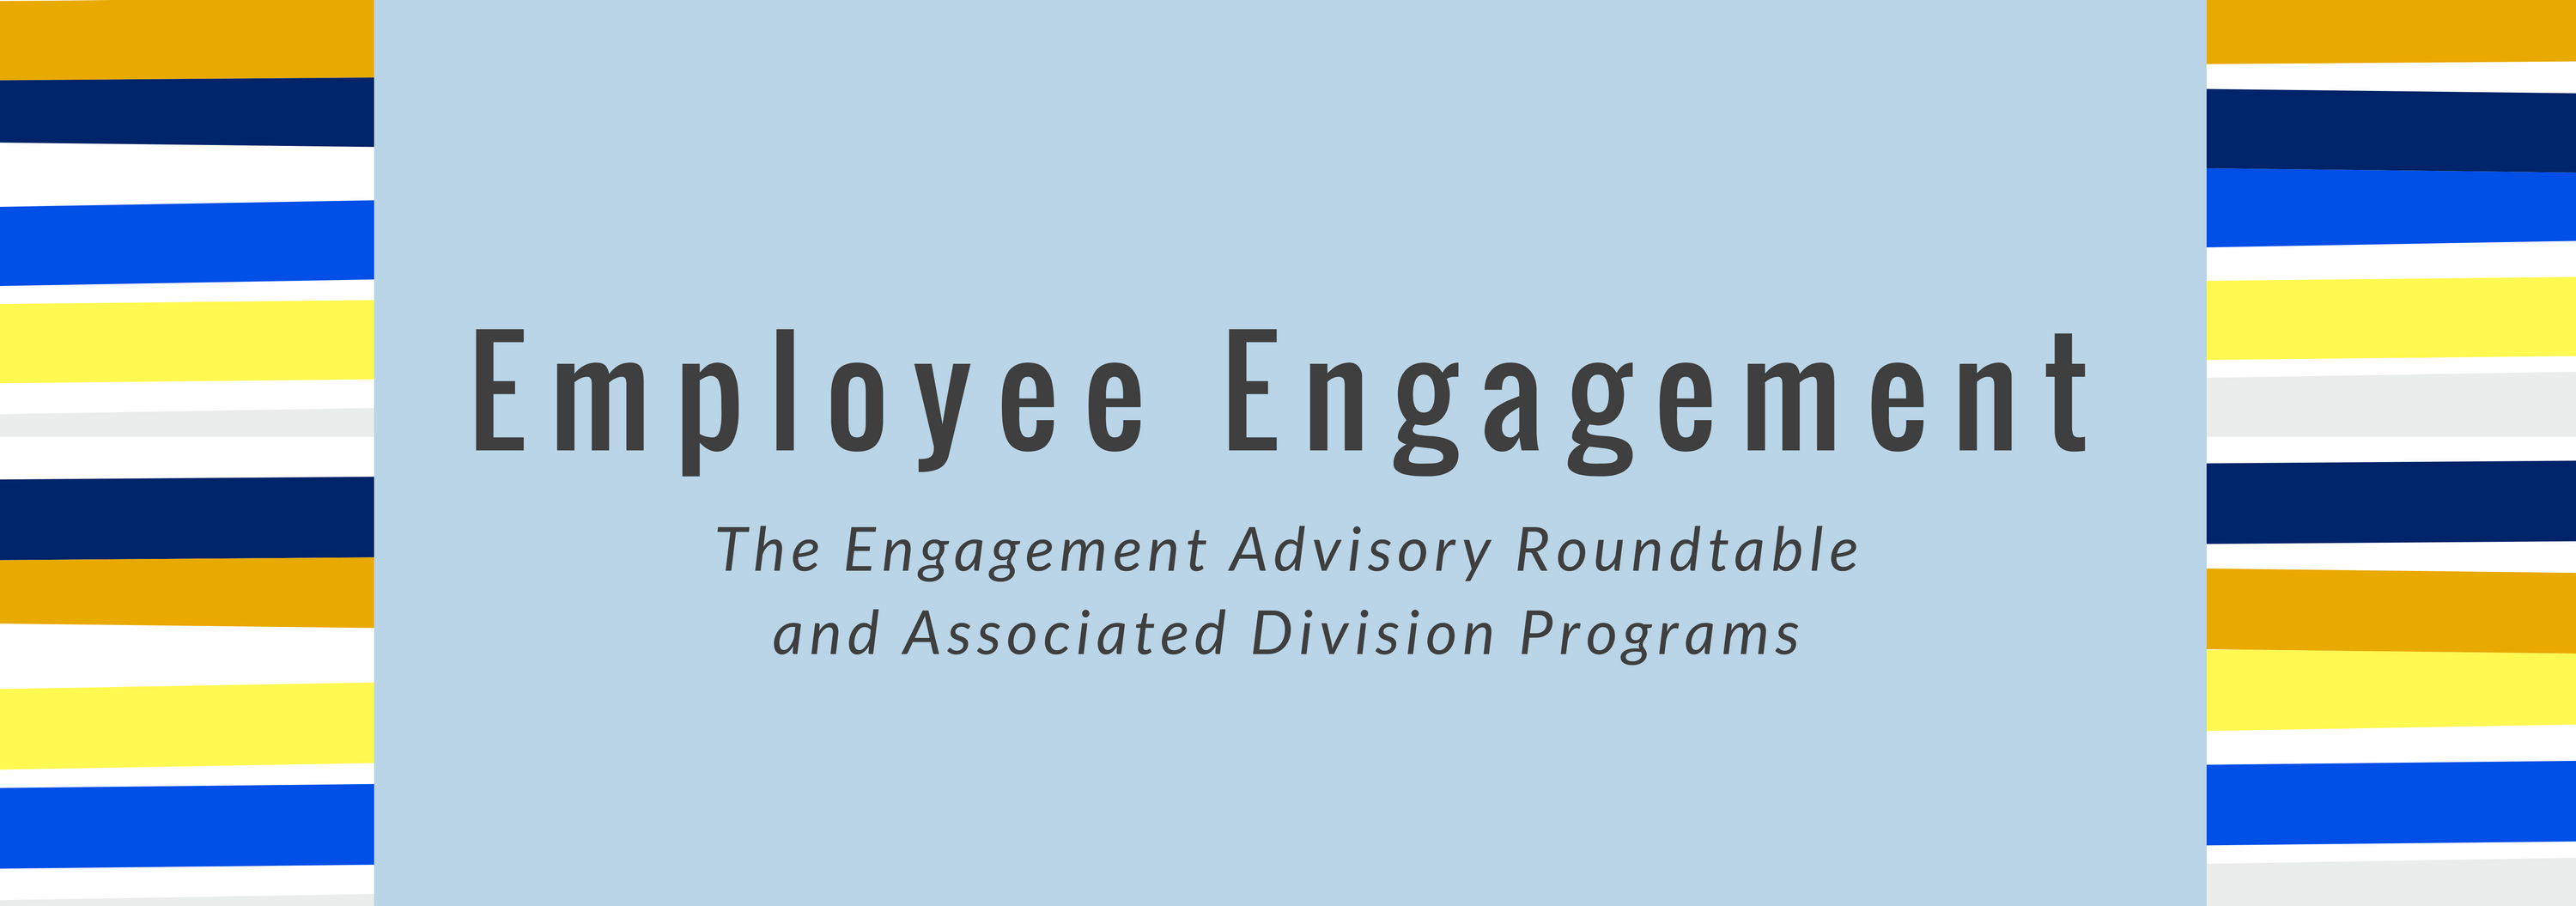 employee engagement banner